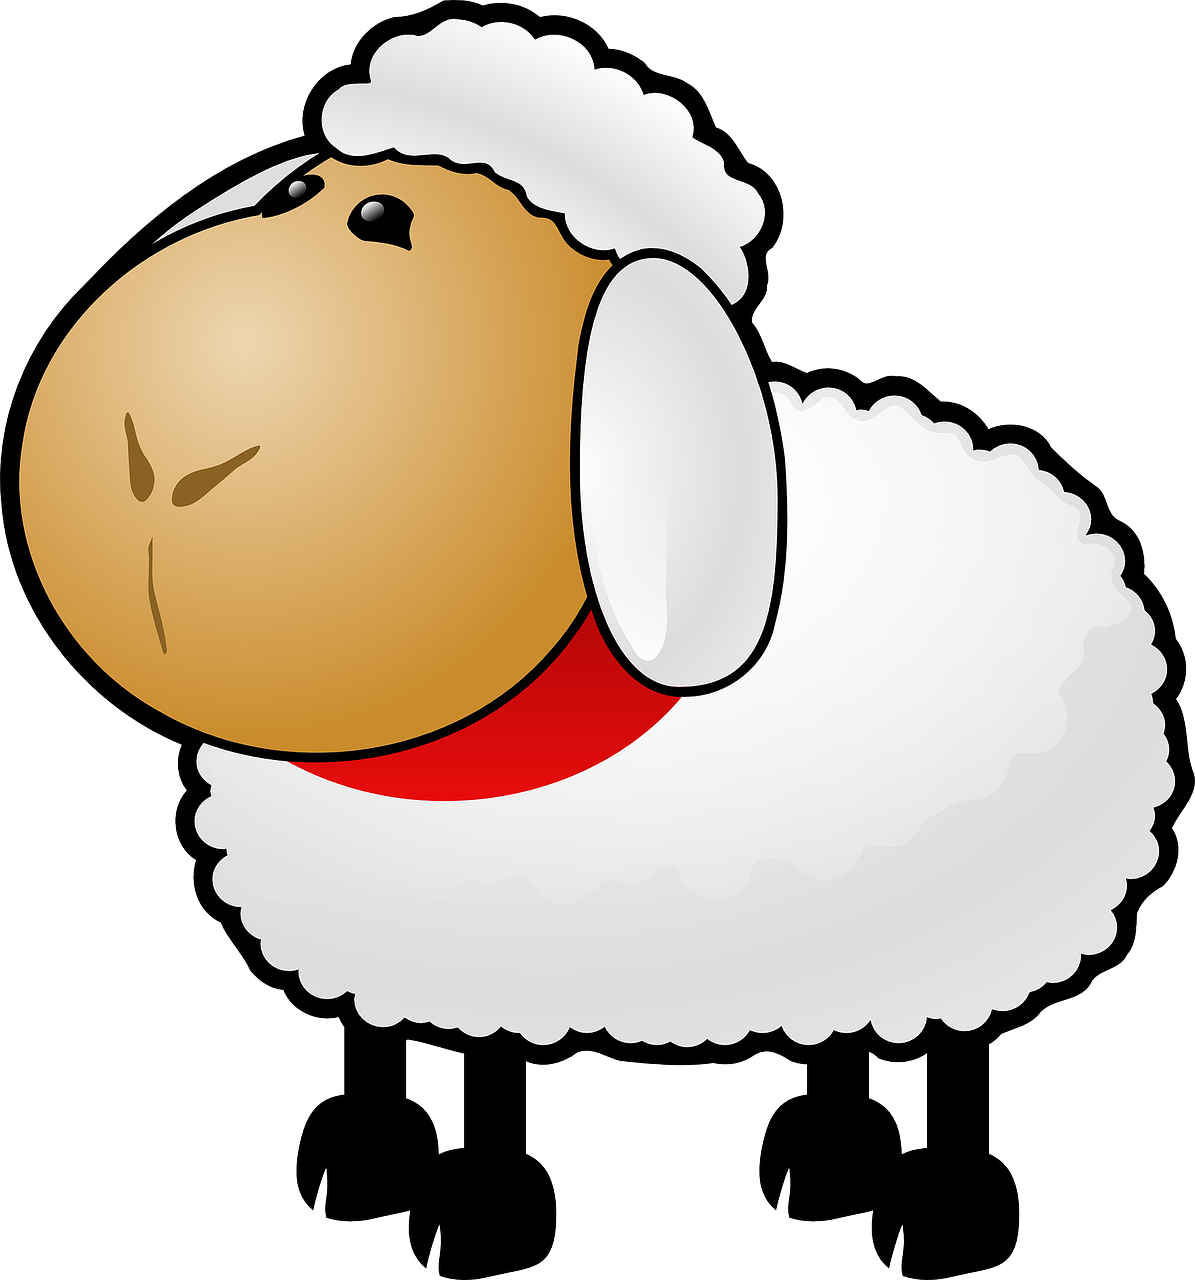 a cartoon sheep wearing a santa hat, mingei, animal, slave, ( land ), simple